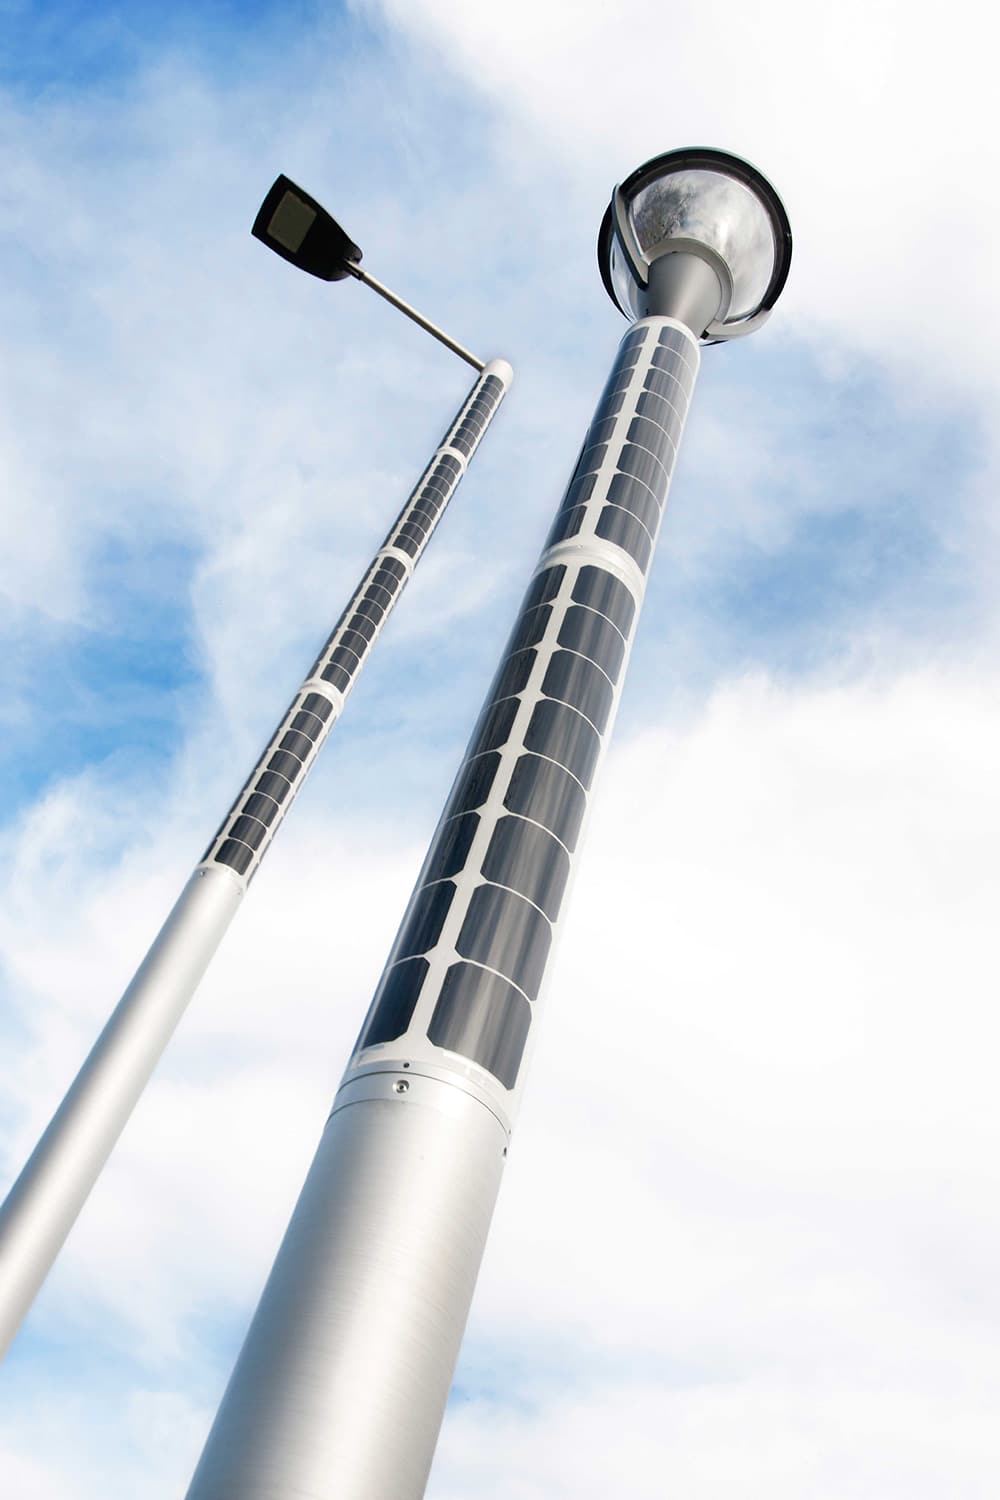 FlexSol Soluxio solar light pole, solar powered lighting column or solar street light, with flexible PV cells.